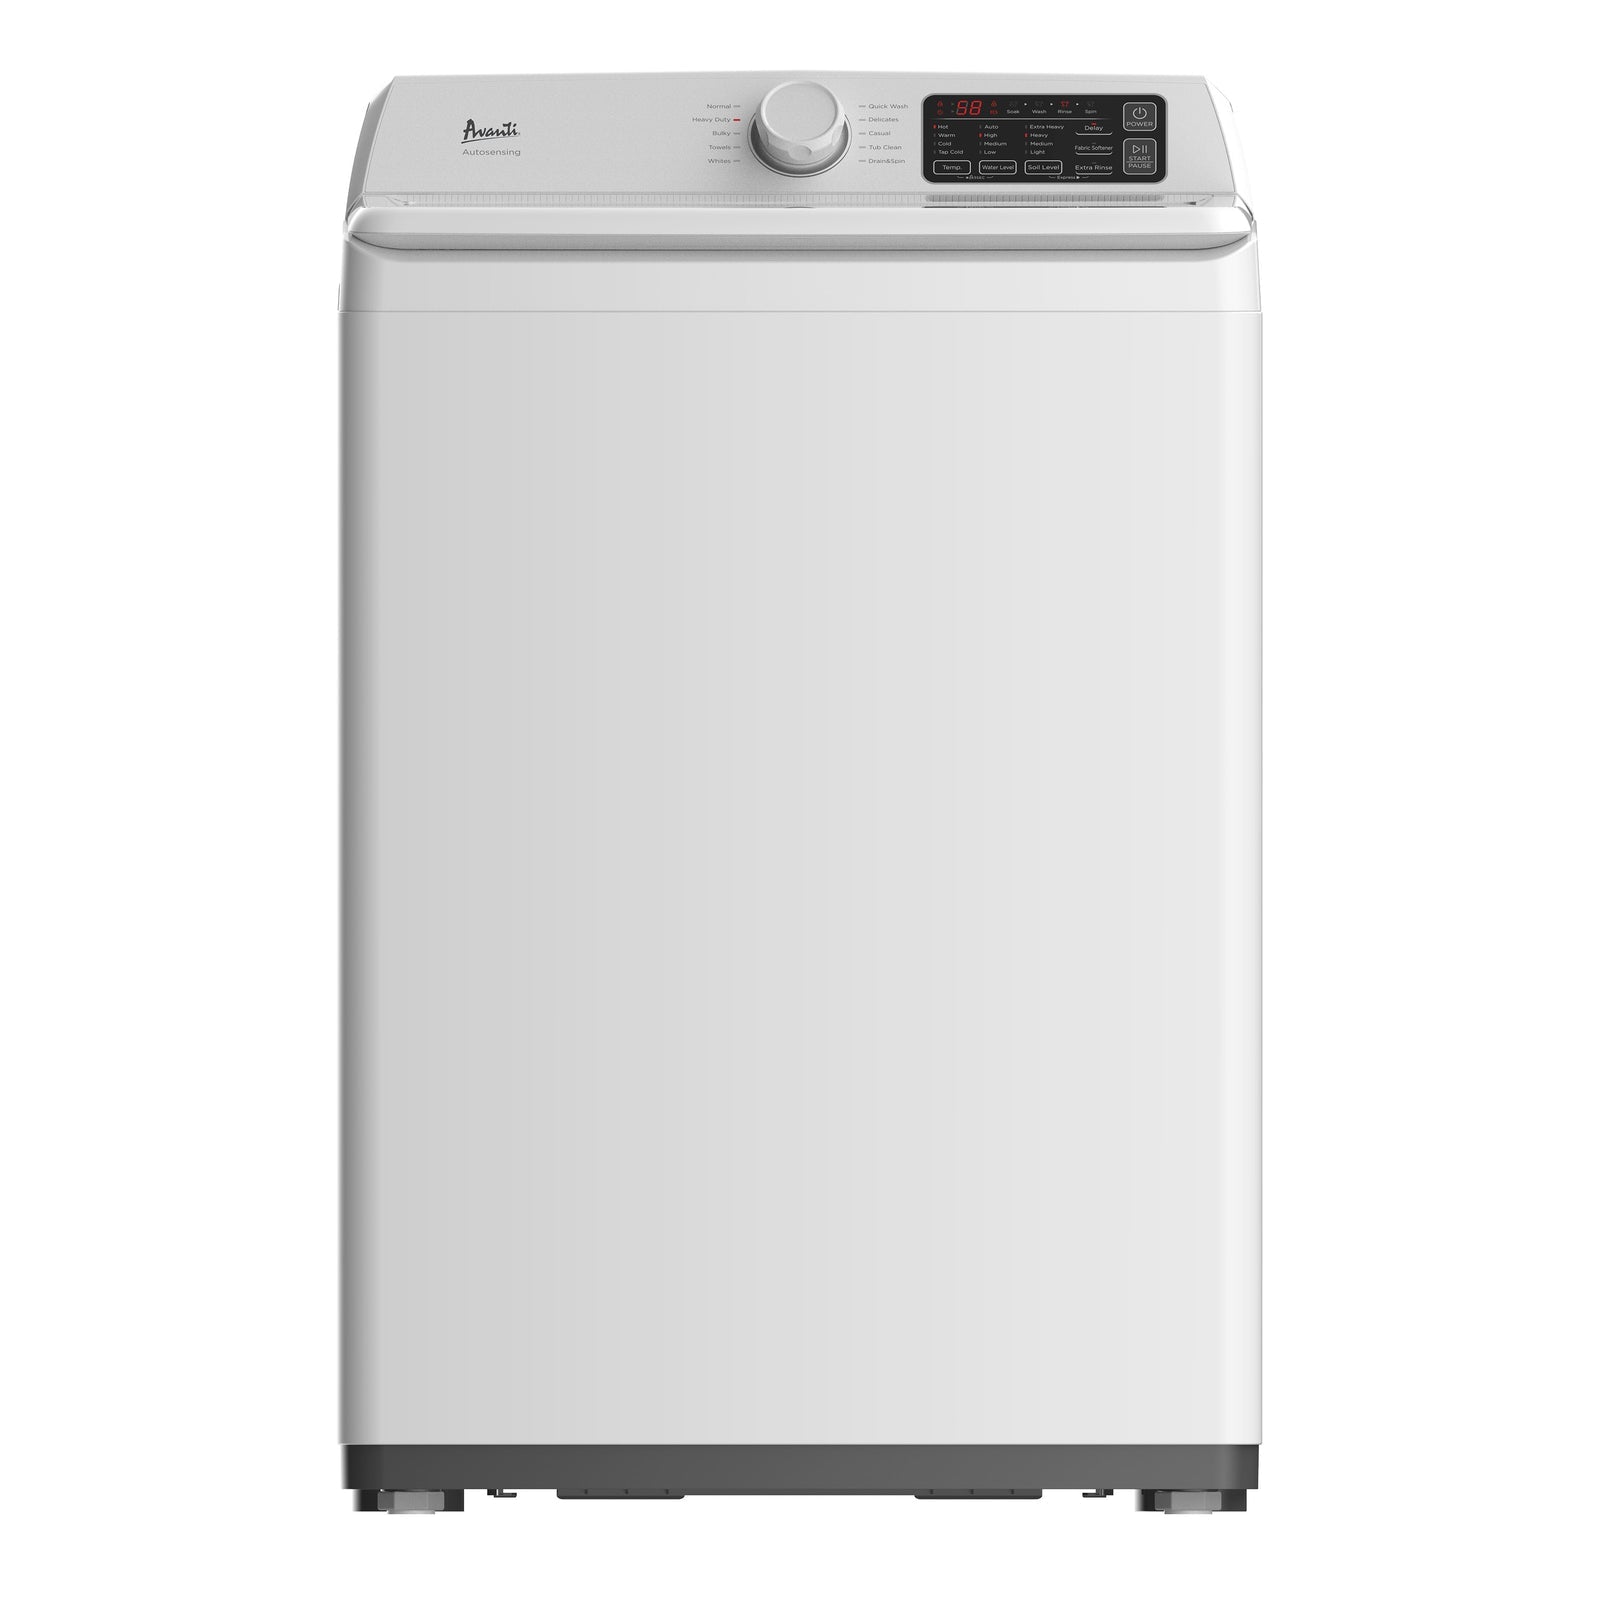 Avanti Compact Top Load Washing Machine, 3.7 cu. ft. Capacity - White / 3.7 cu. ft.